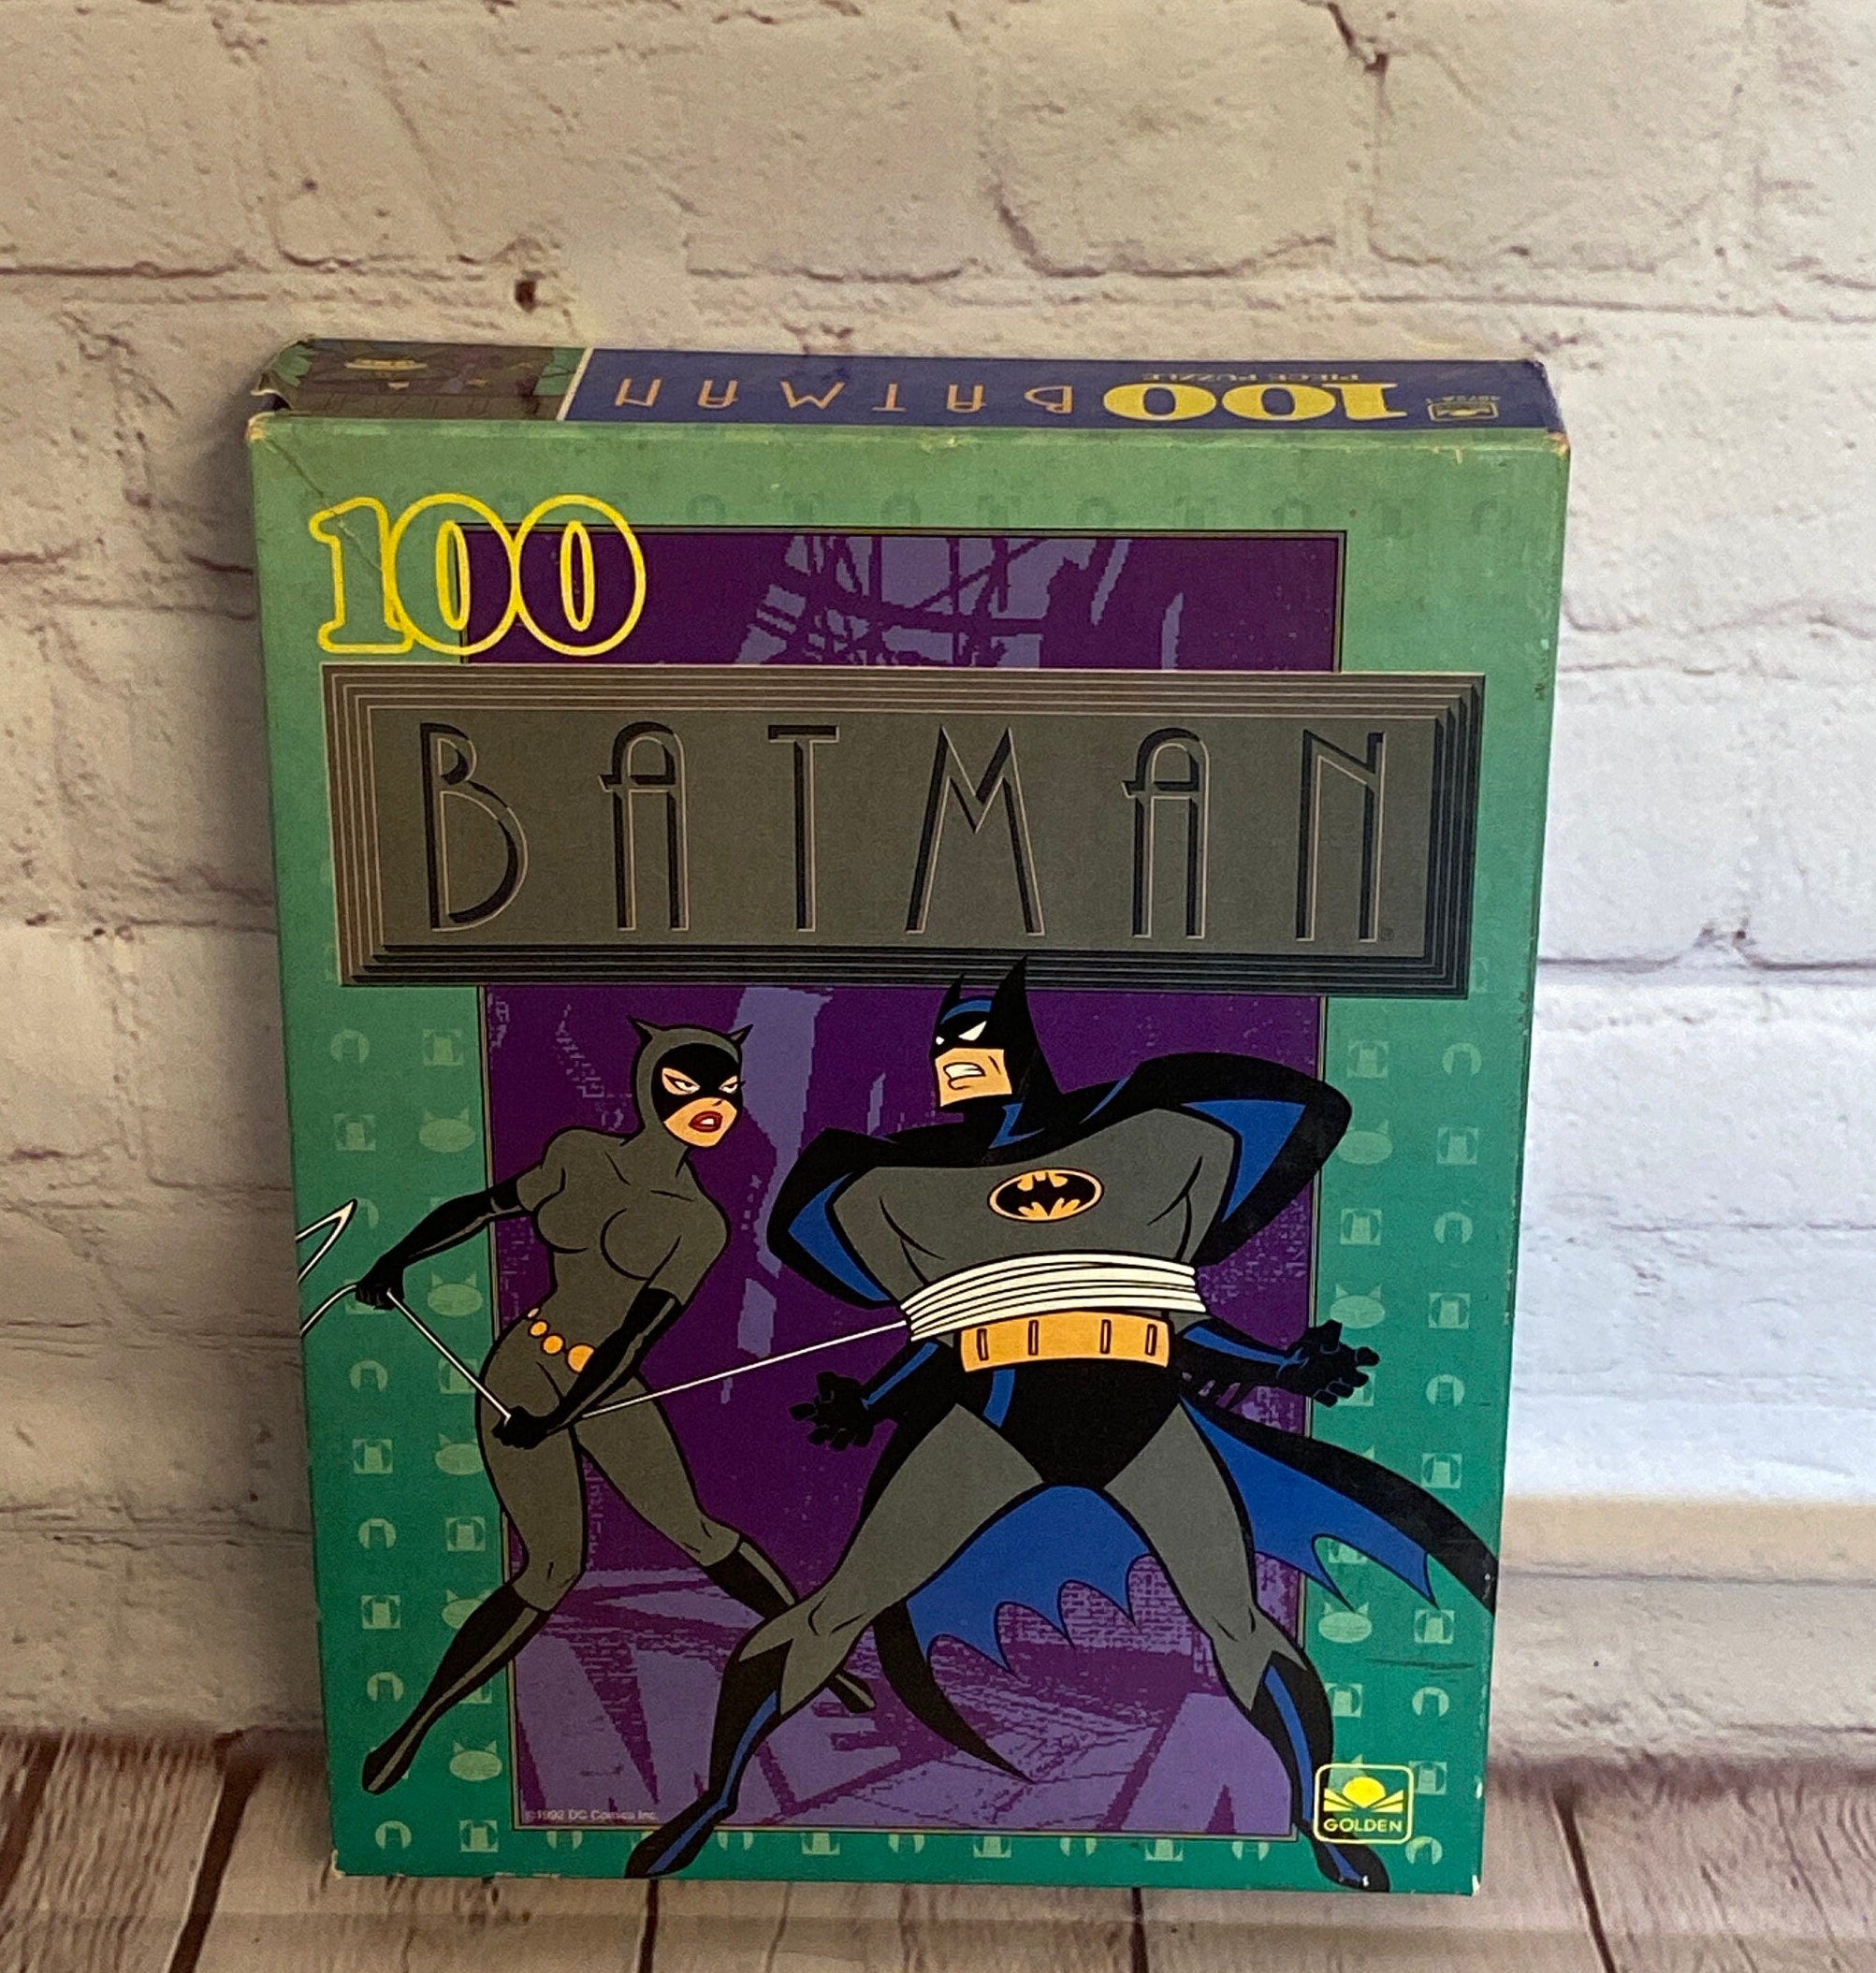 1966 Whitman Batman Coloring Book comic LIGHTLY COLORED dc robin joker